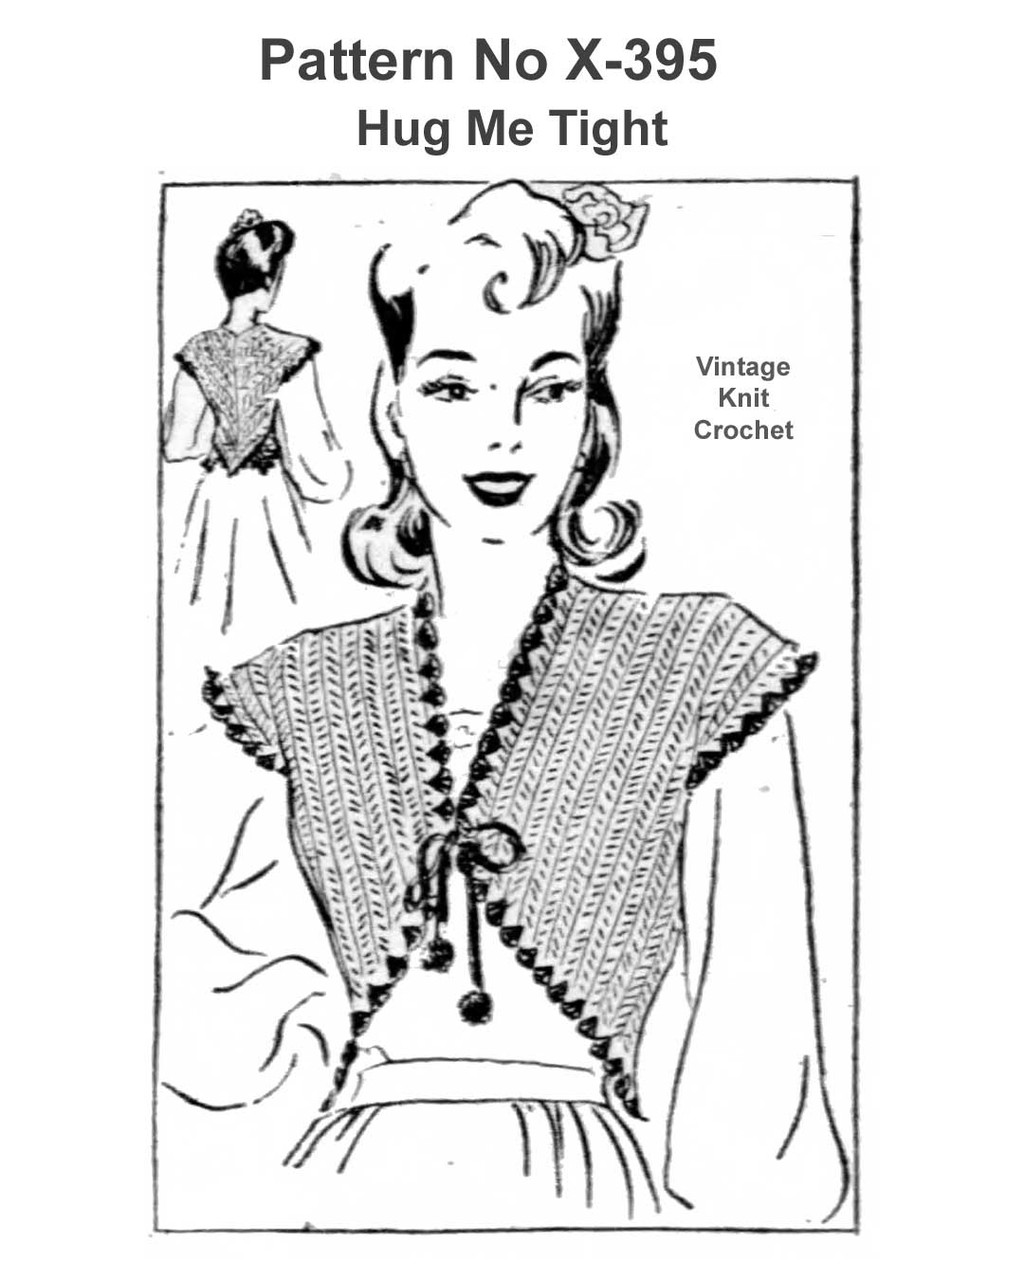 Vintage Crochet Shrug Pattern X-395, Hug Me Tight